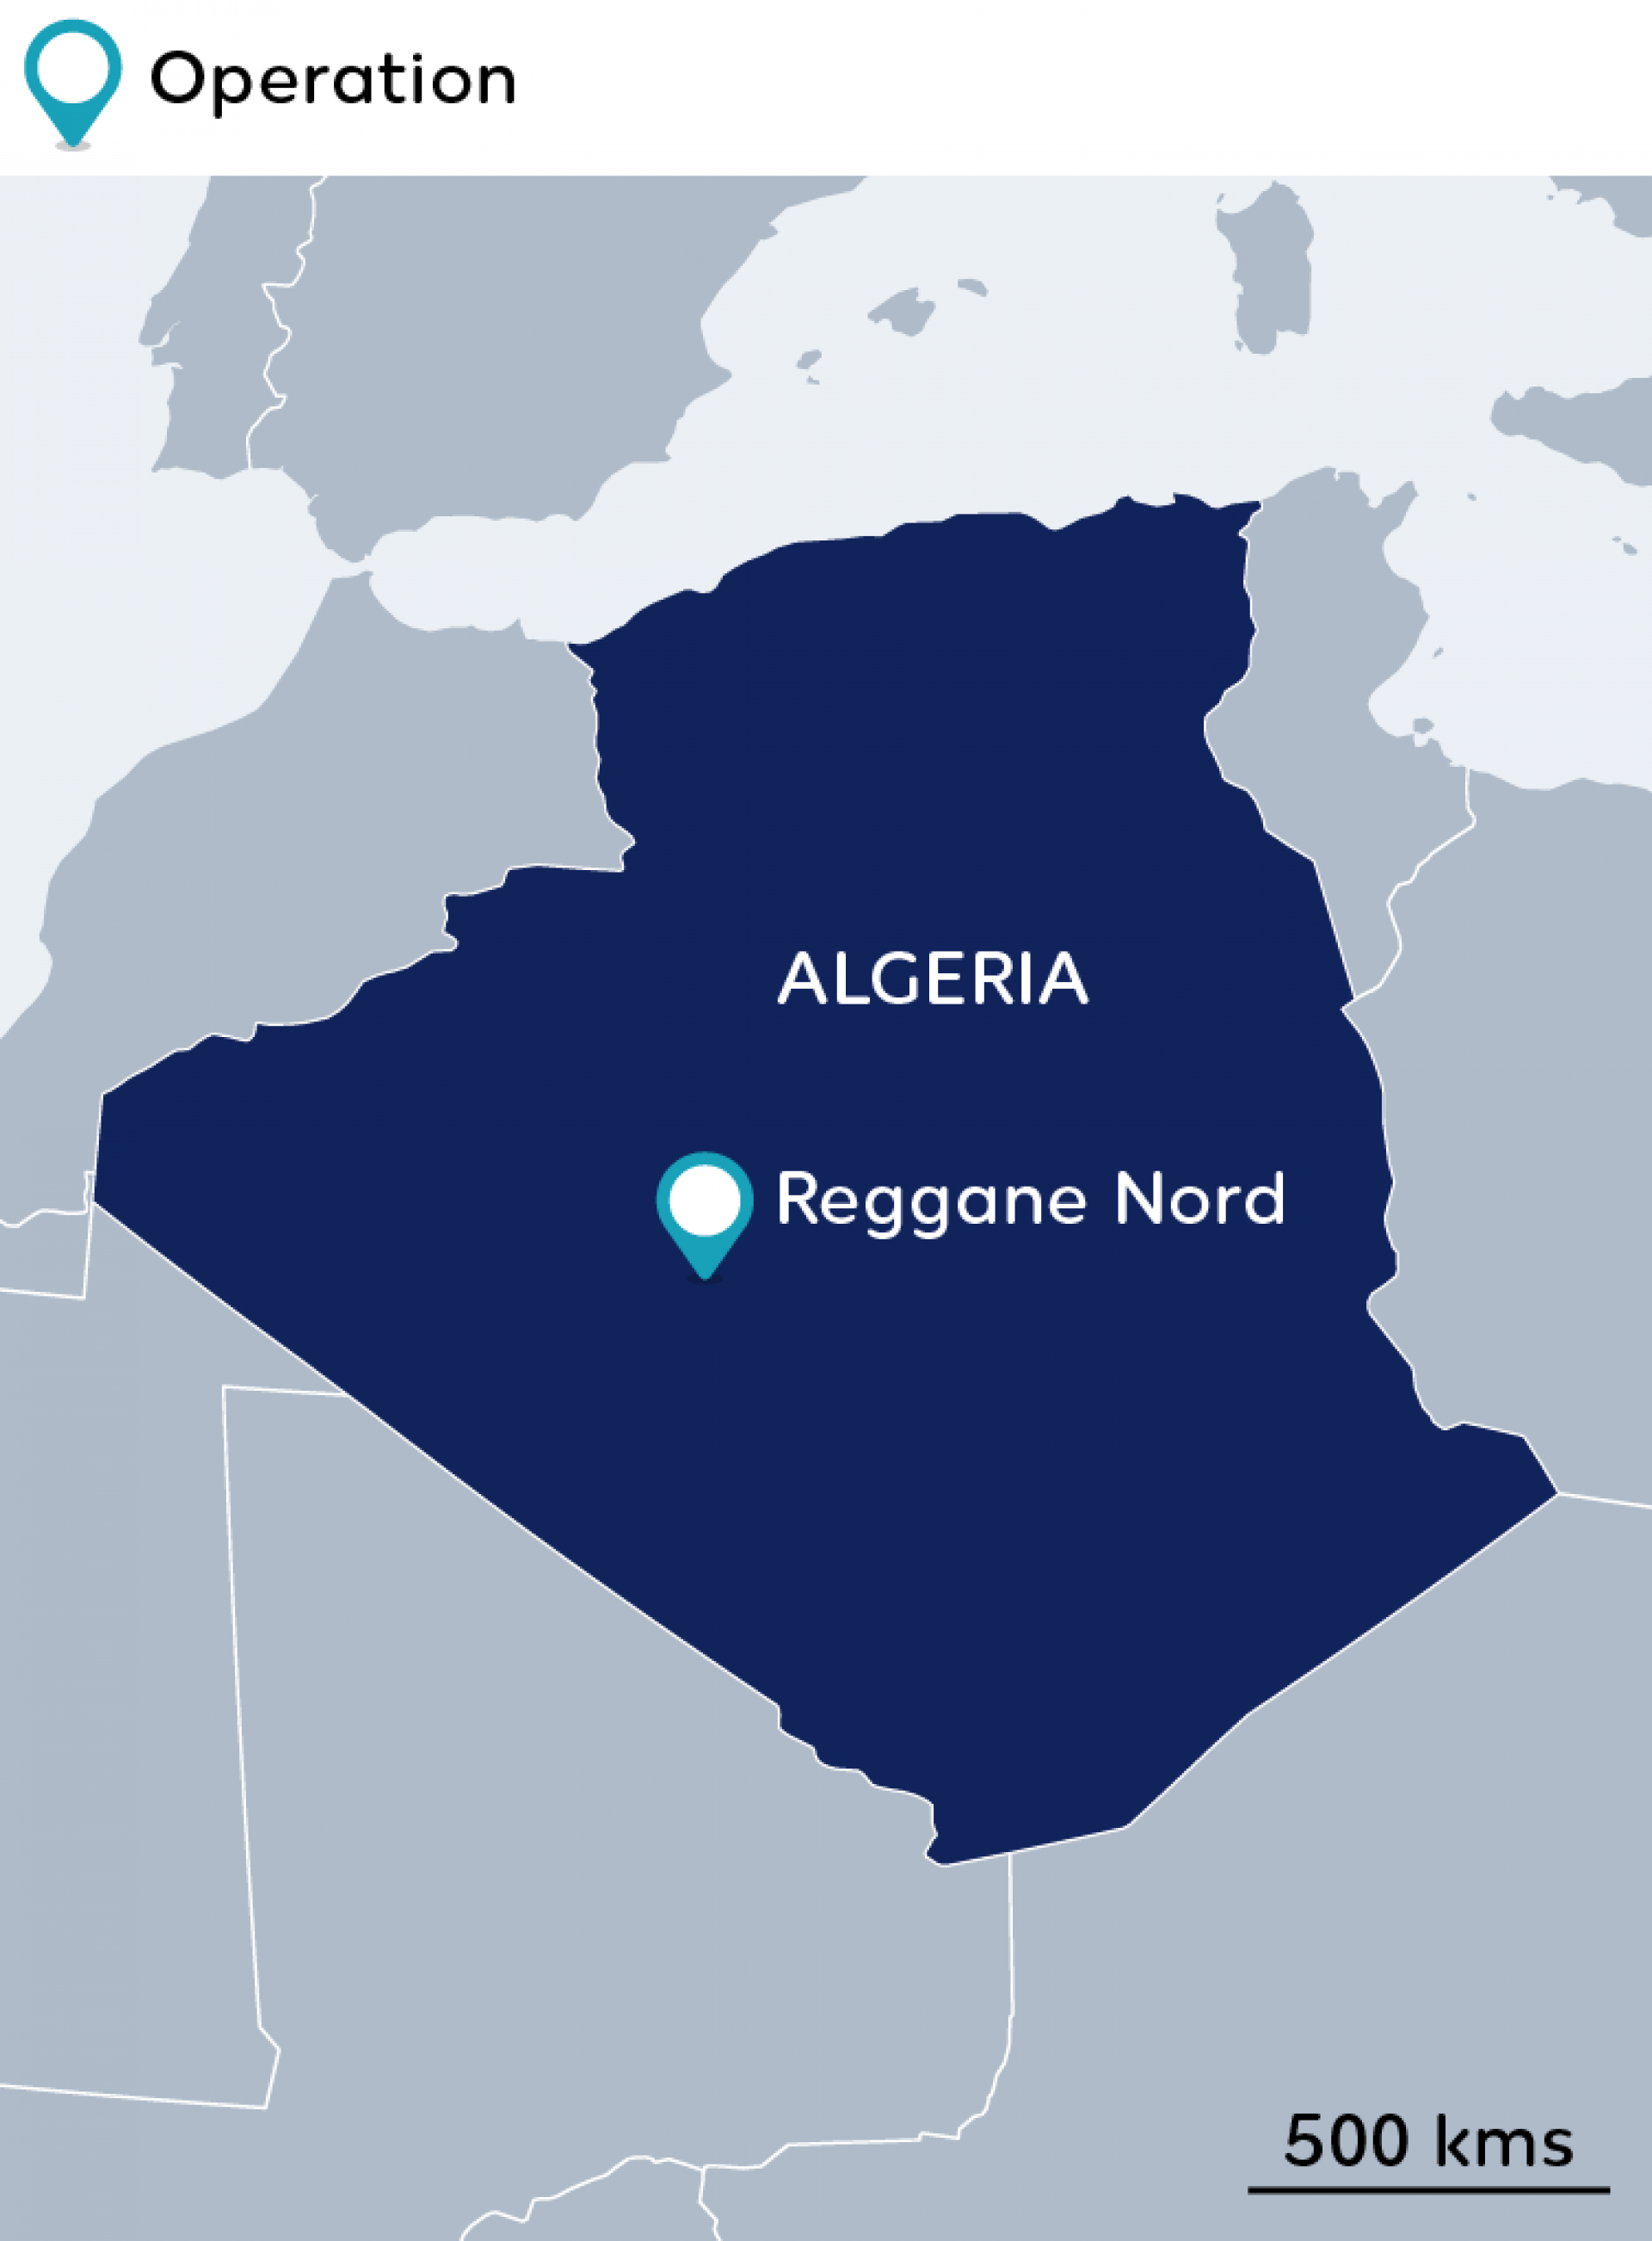 Glace Carbonique - Boumerdes Algeria